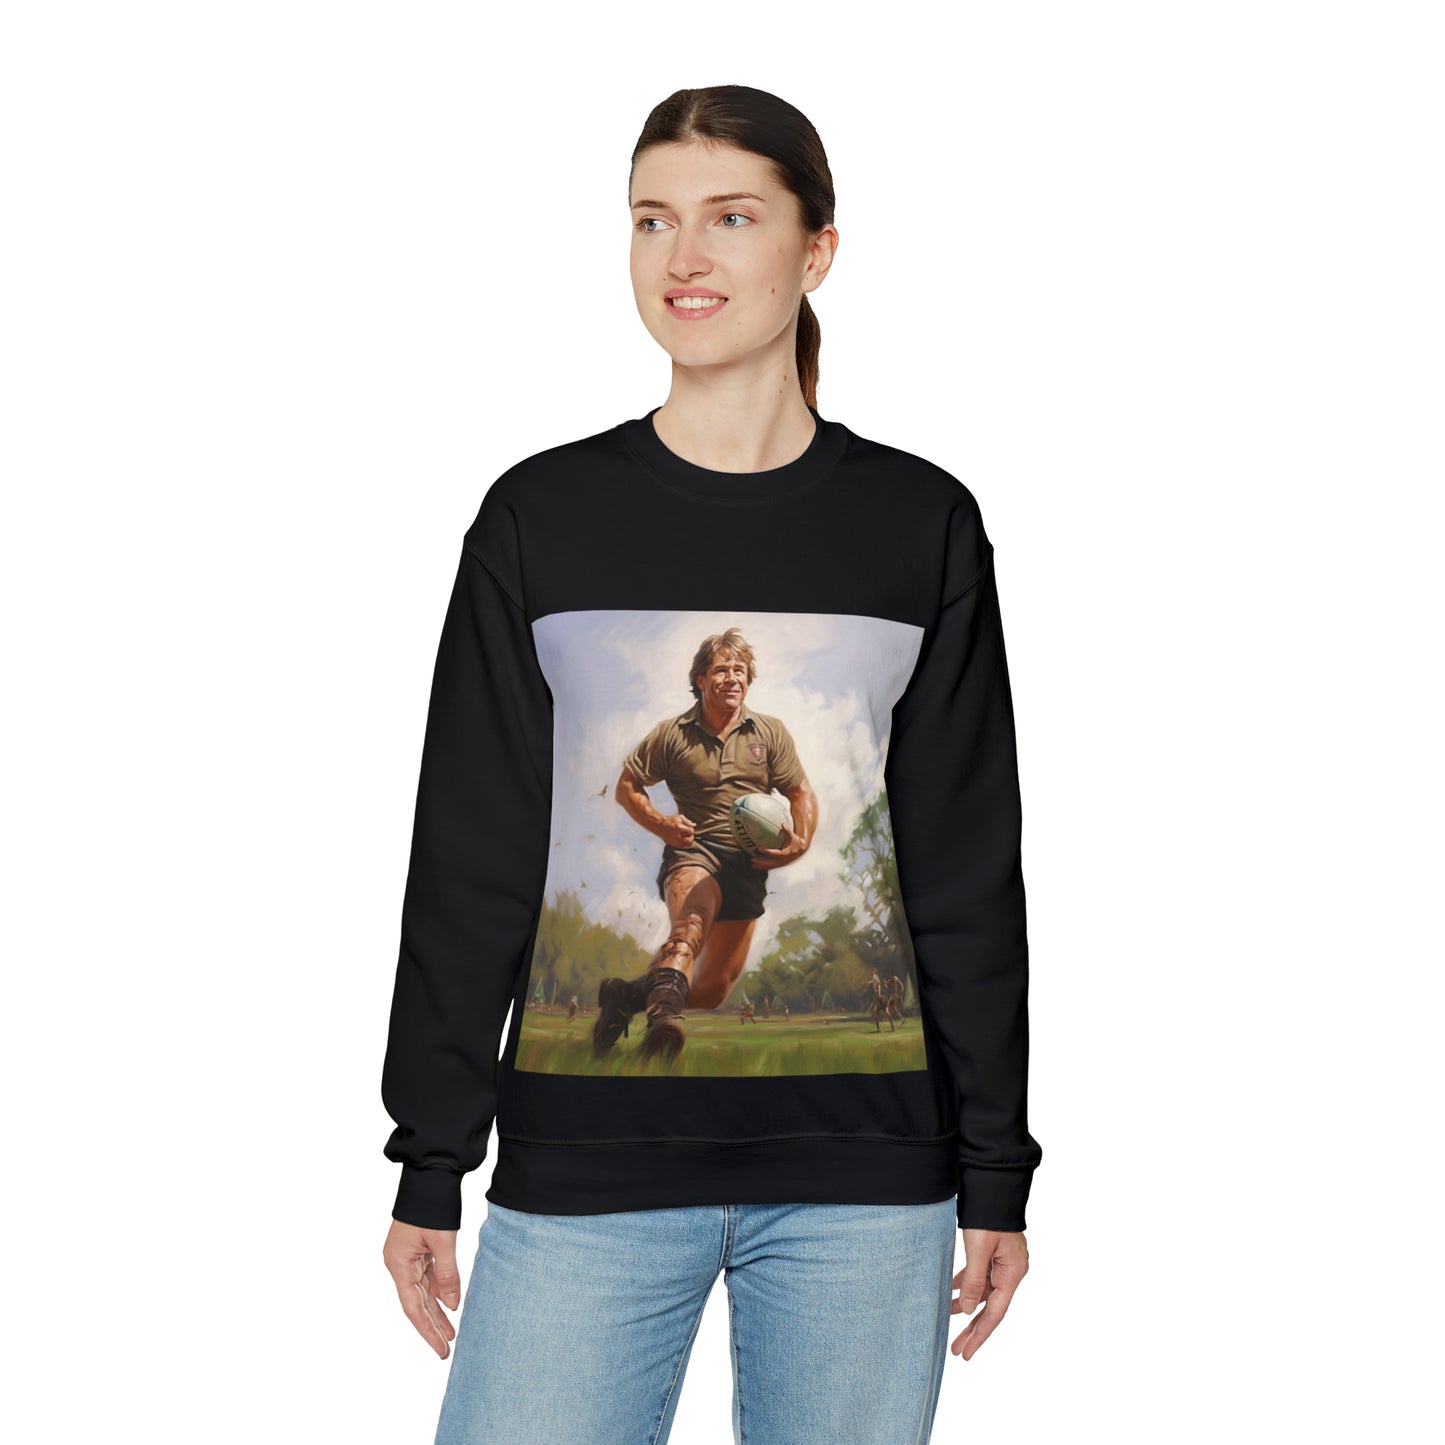 Steve Irwin 2 - black sweatshirt